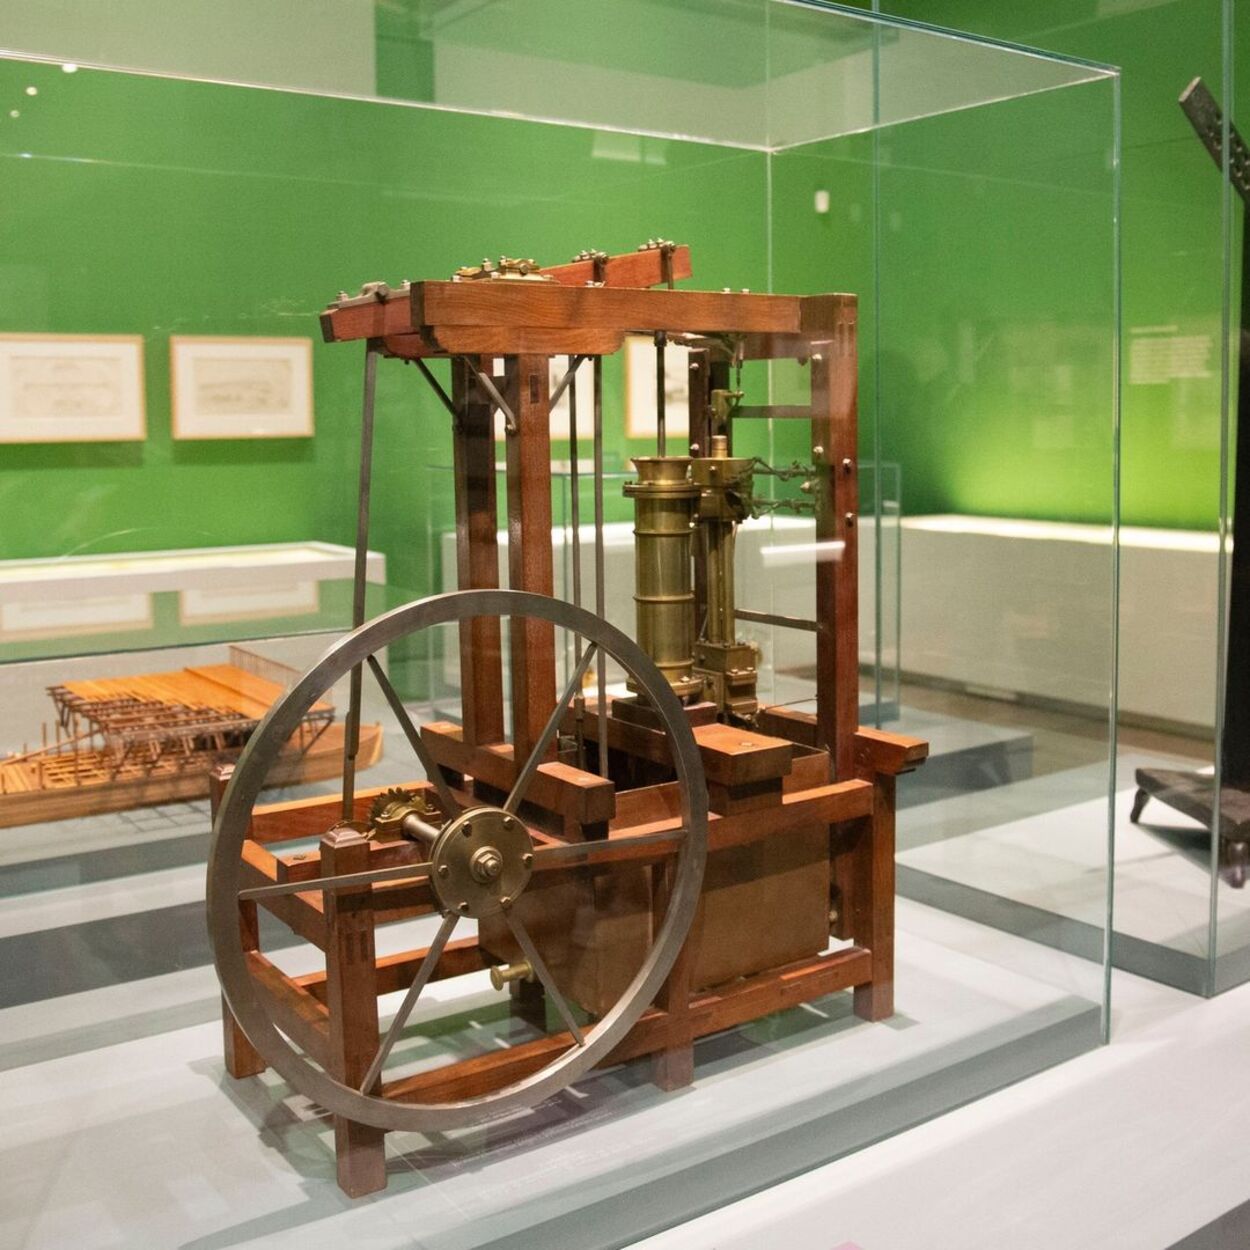 Máquinas de vapor o telégrafos en una exposición sobre el ingeniero Agustín de Betancourt